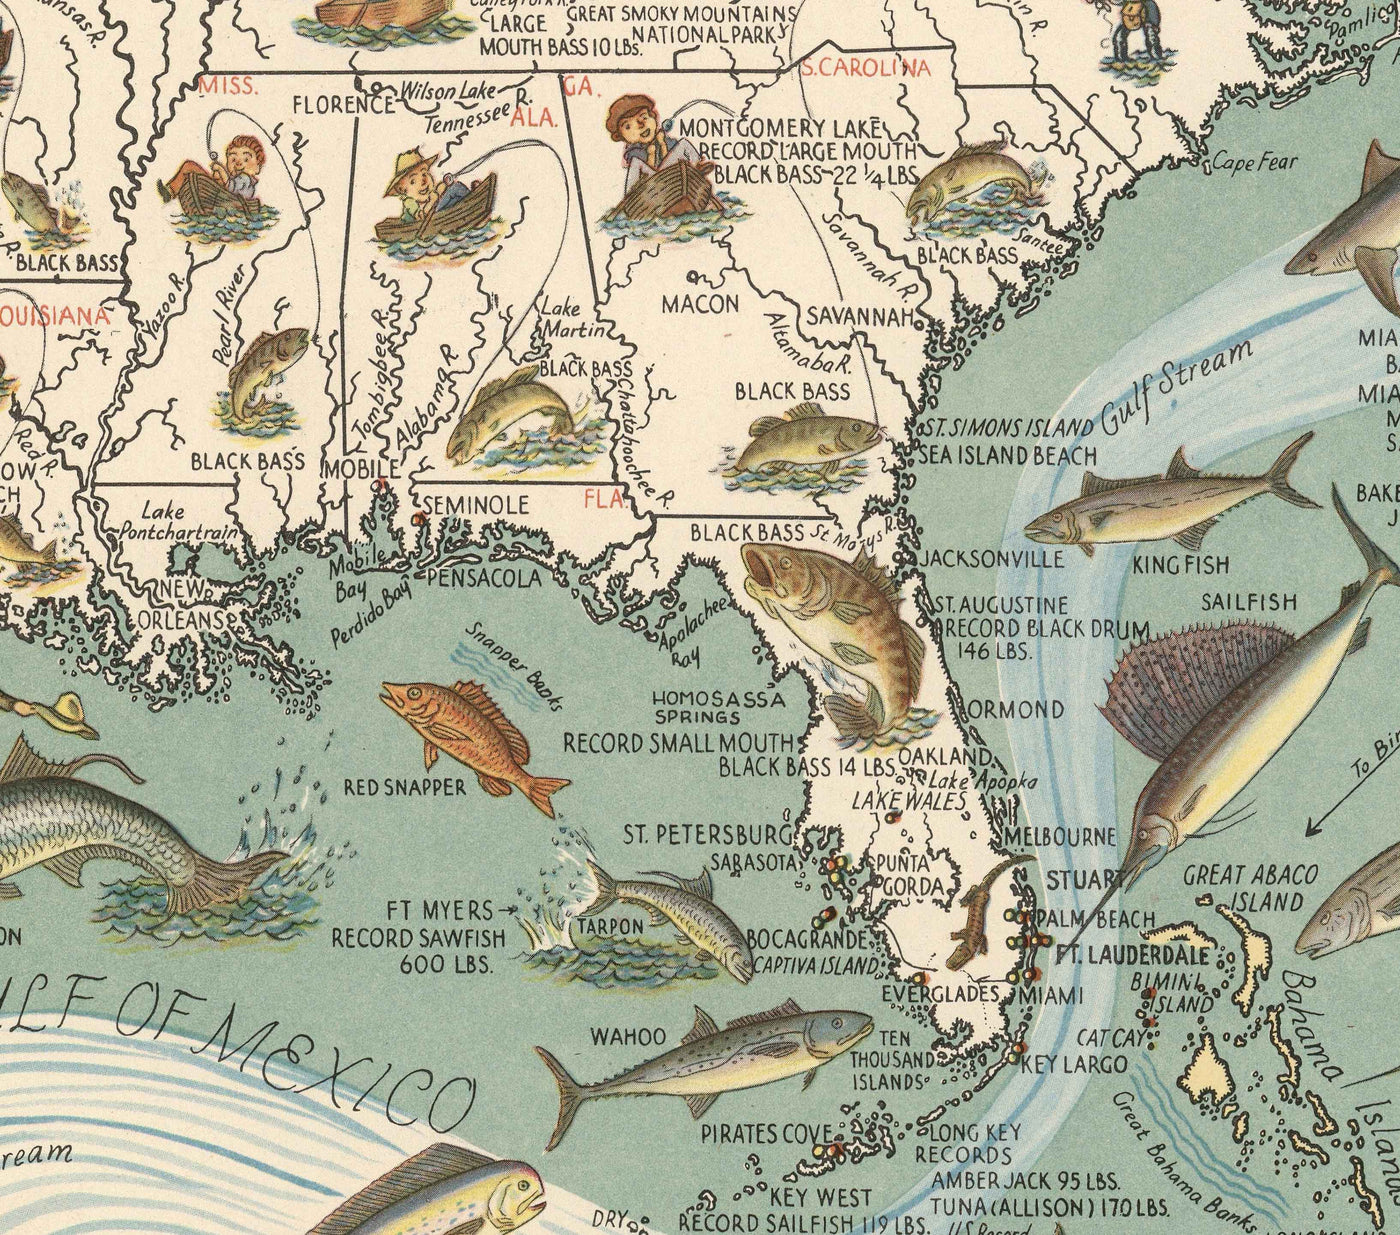 Alte bildliche Großwildfischkarte der USA, 1936 - Alaska, Florida, Michigan, Minnesota, Louisiana